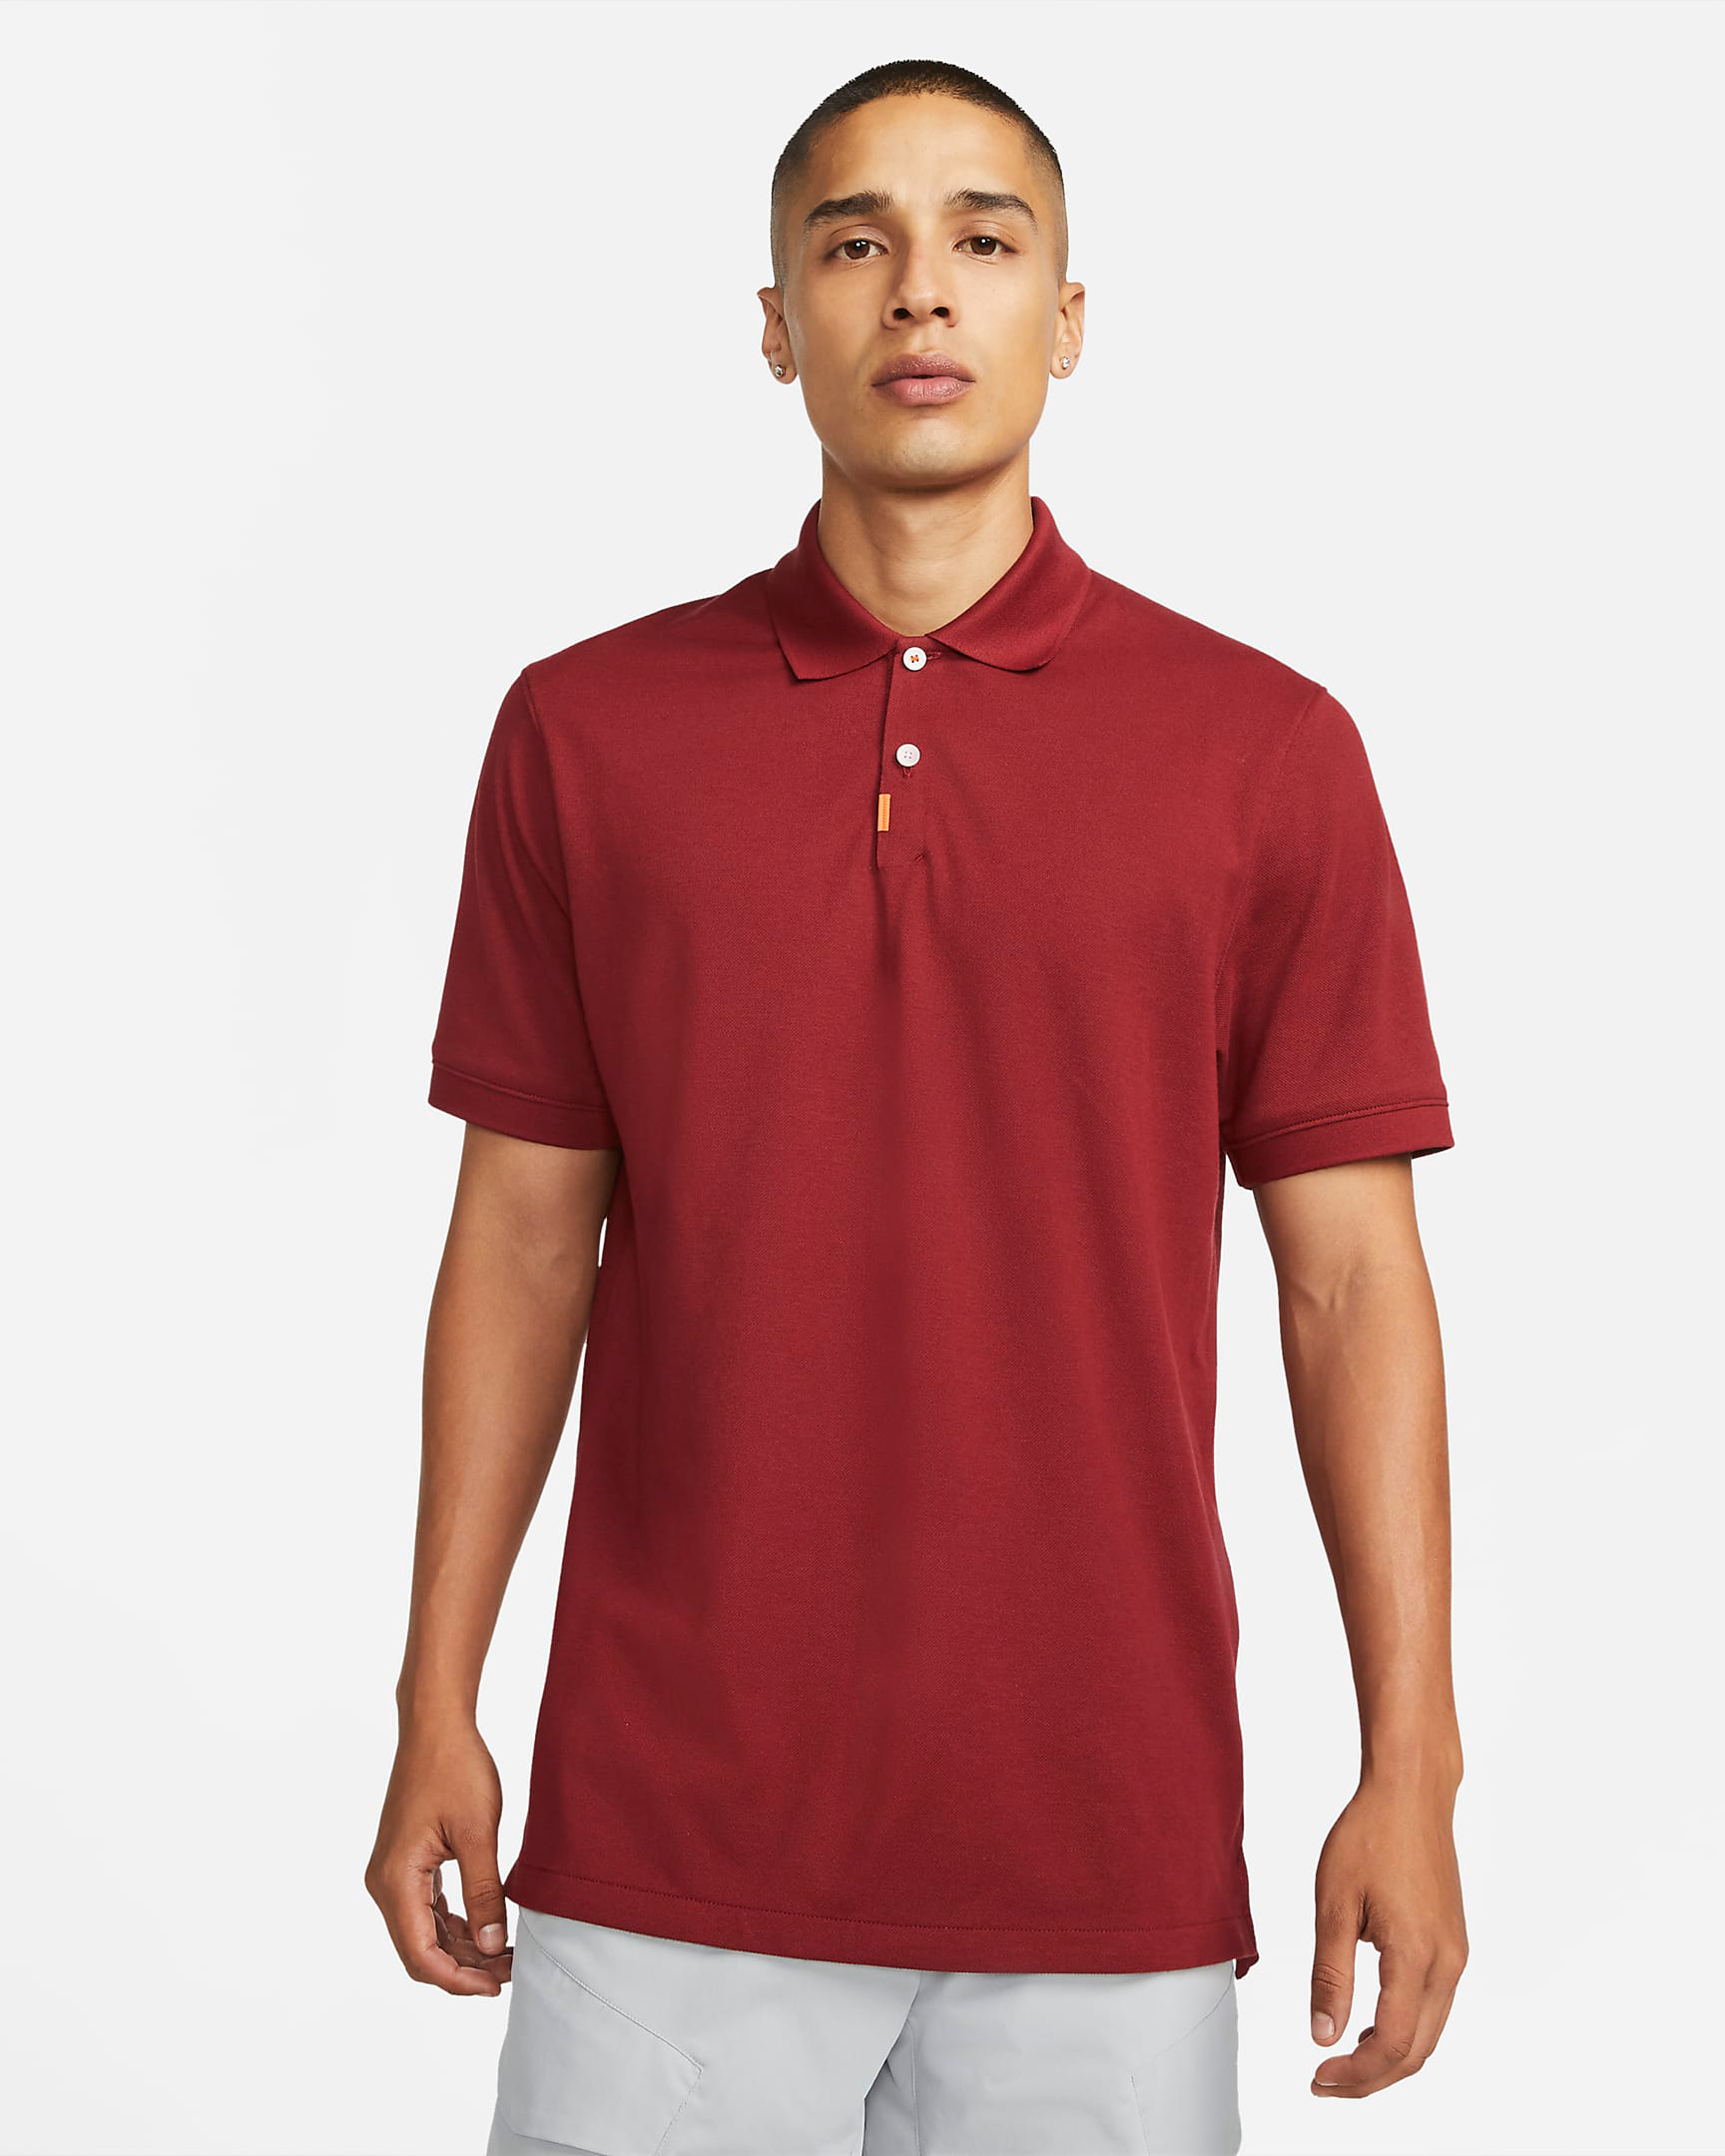 nike-team-red-polo-shirt